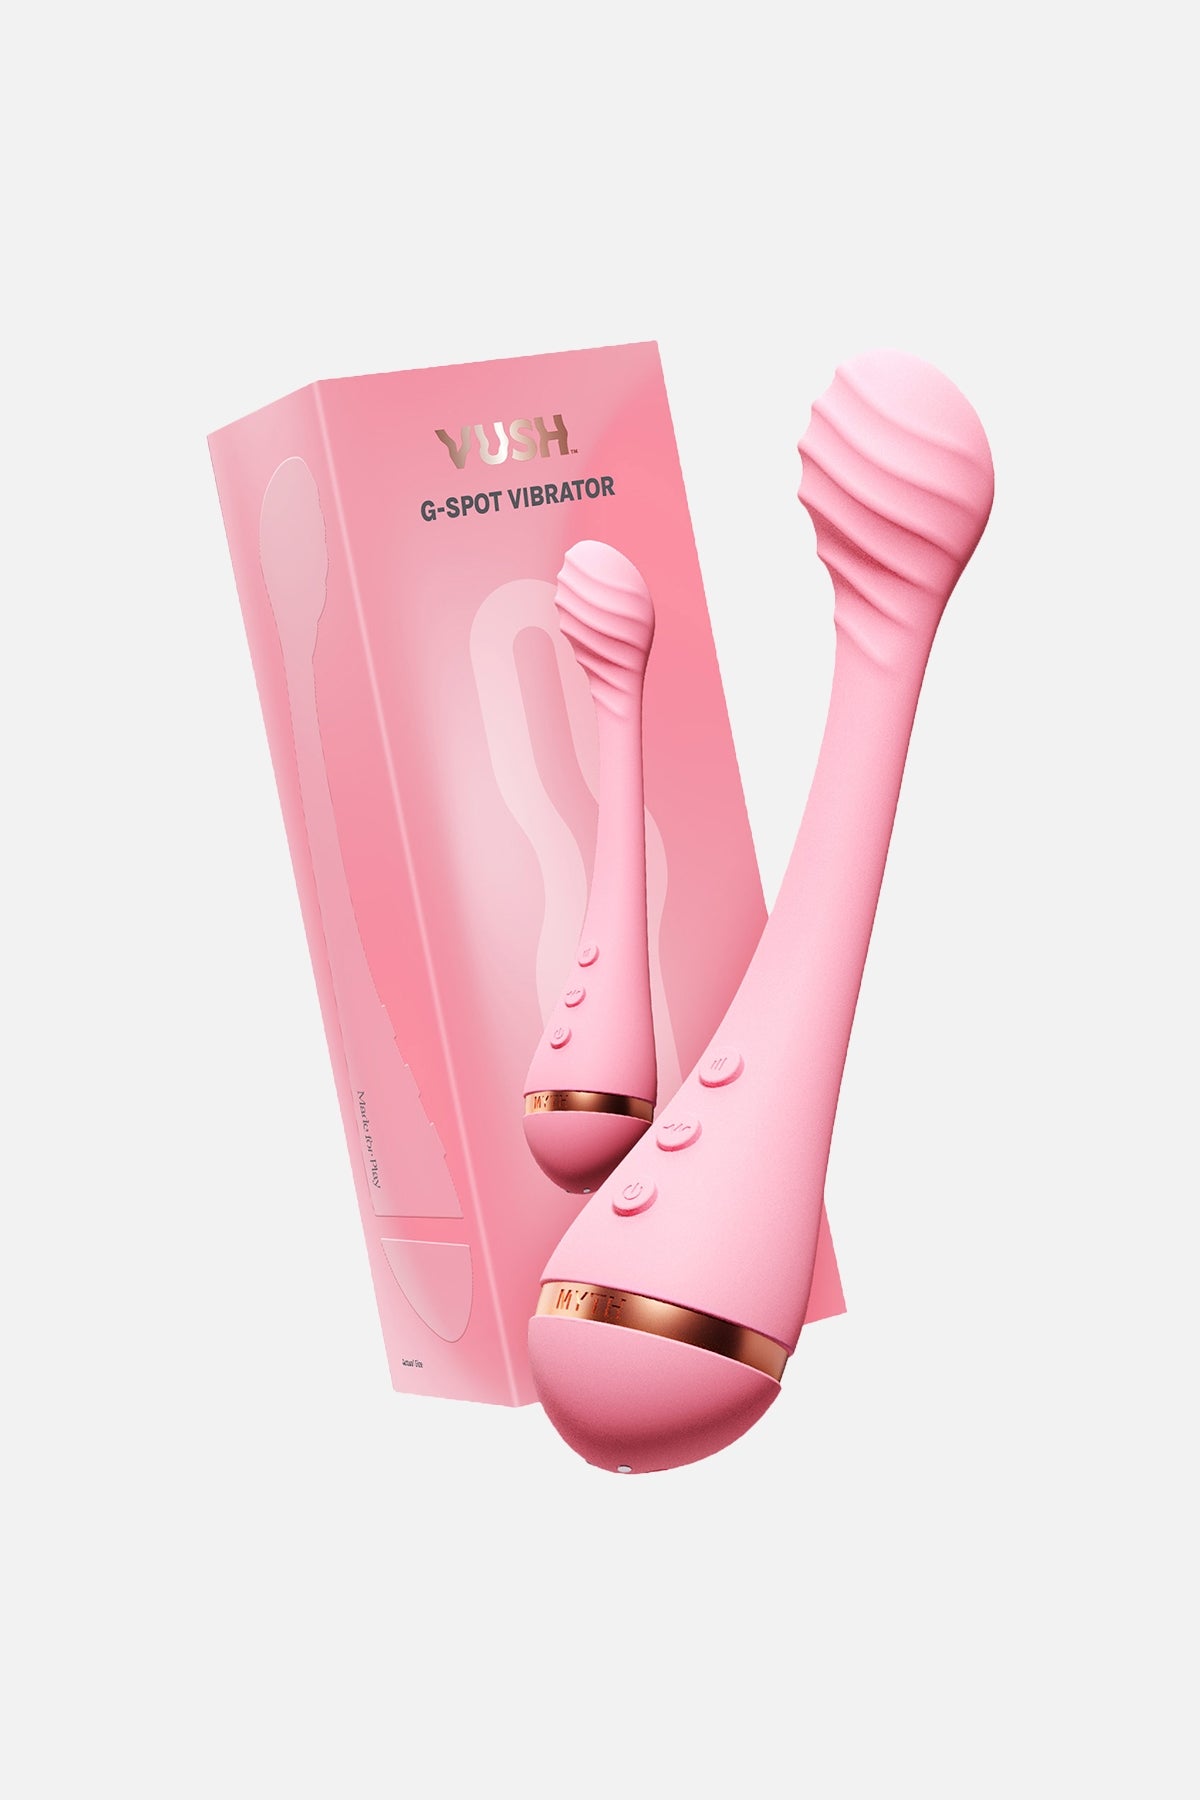 Vush Myth G-Spot Vibrator Pink